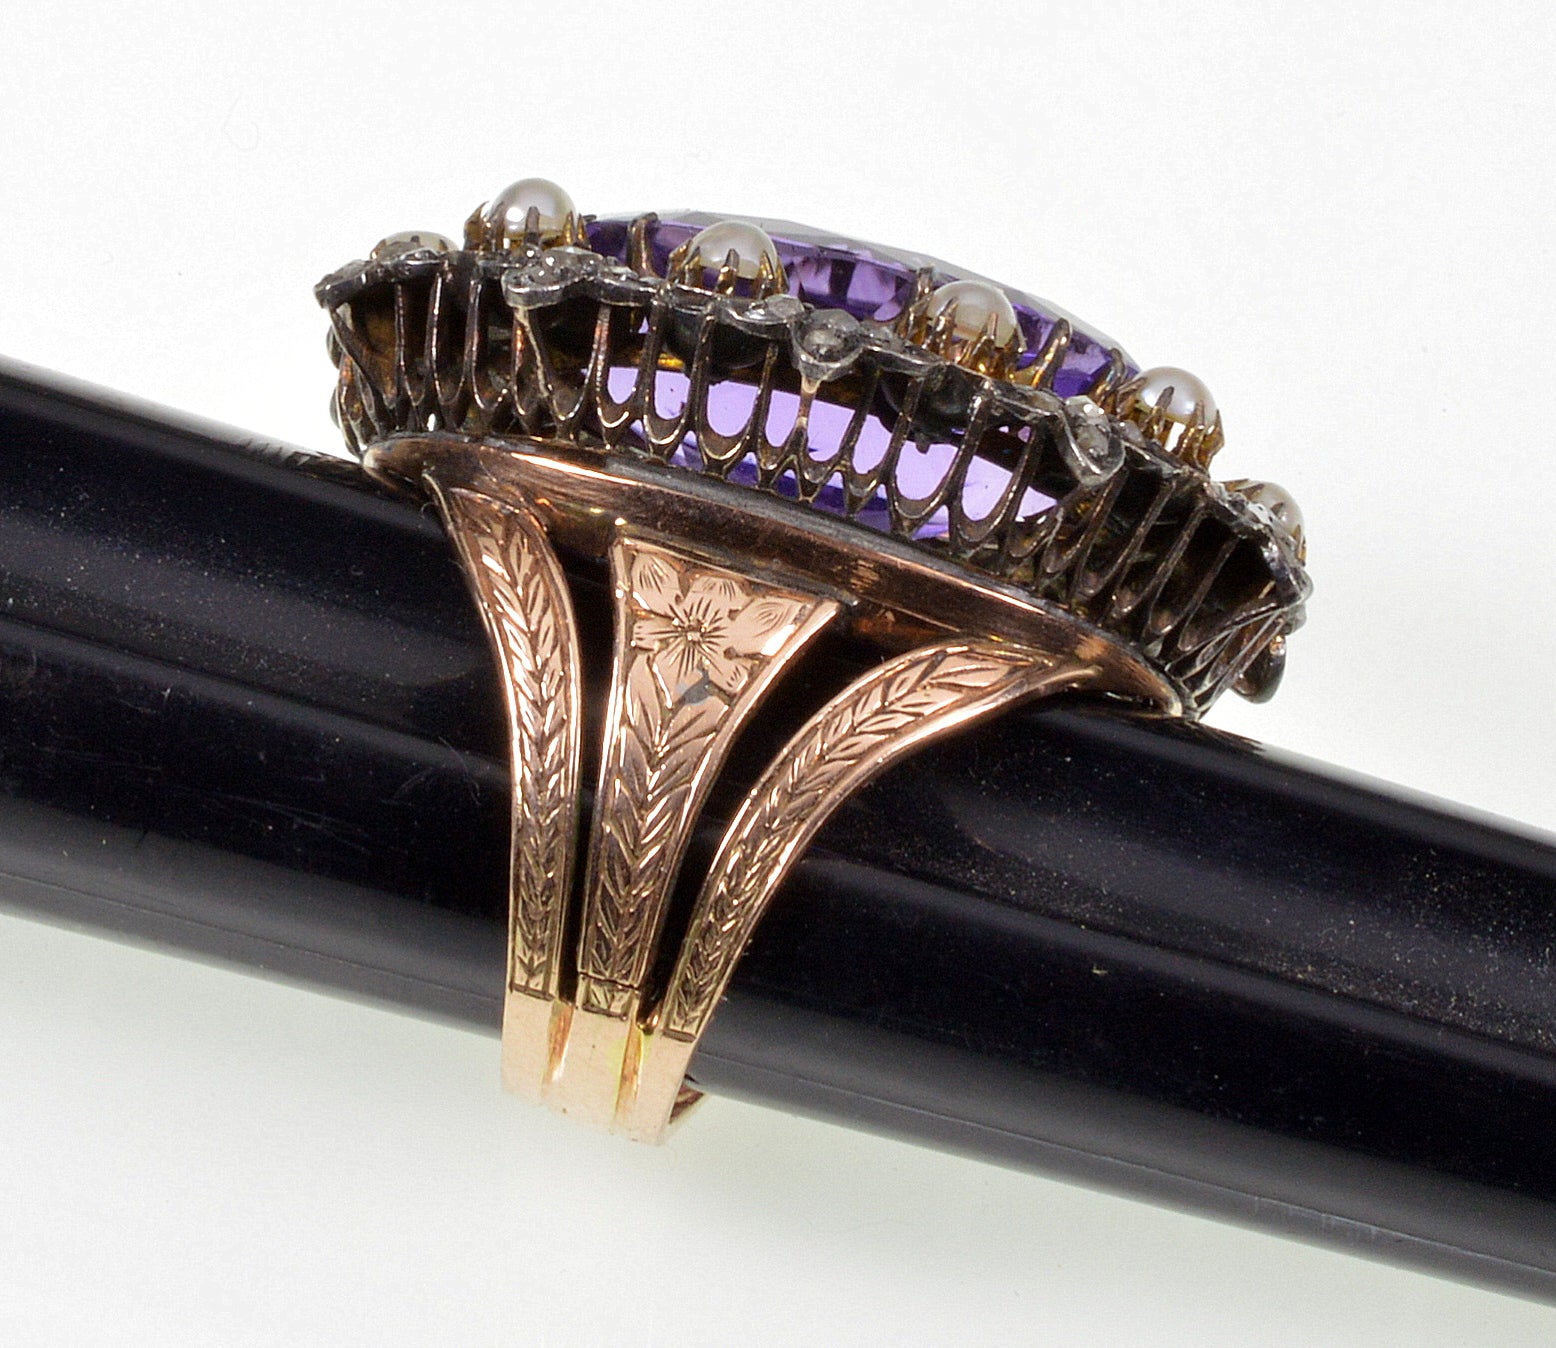 Antique Victorian 14K Gold Ring Amethyst Diamond Pearl C.1860